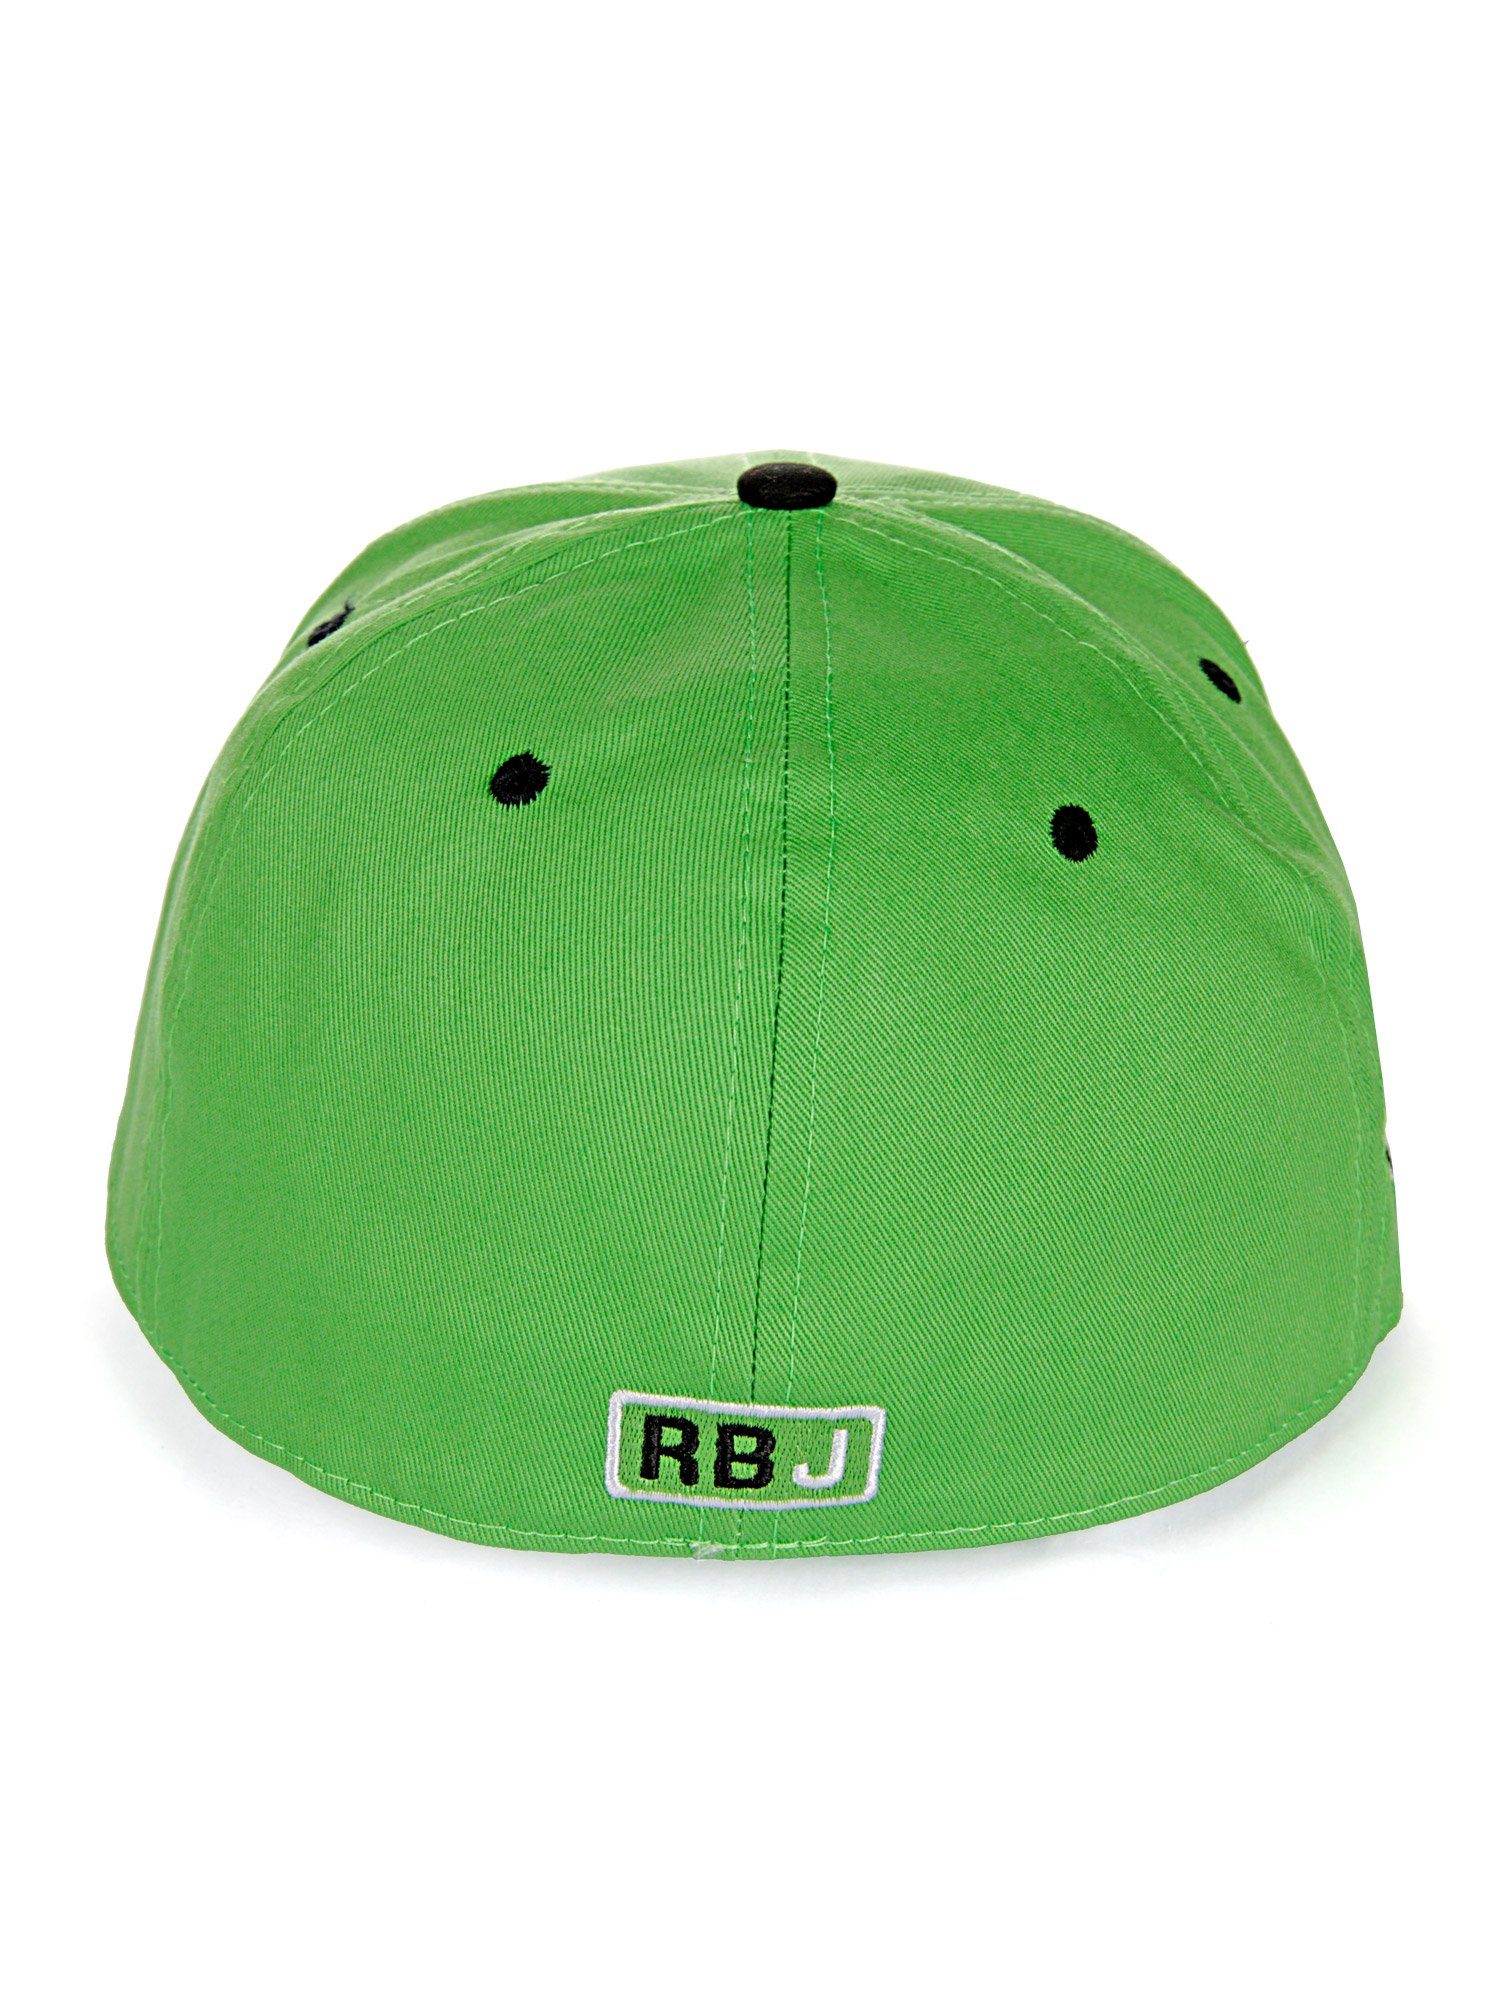 Durham grün-schwarz Baseball Schirm Cap mit RedBridge kontrastfarbigem